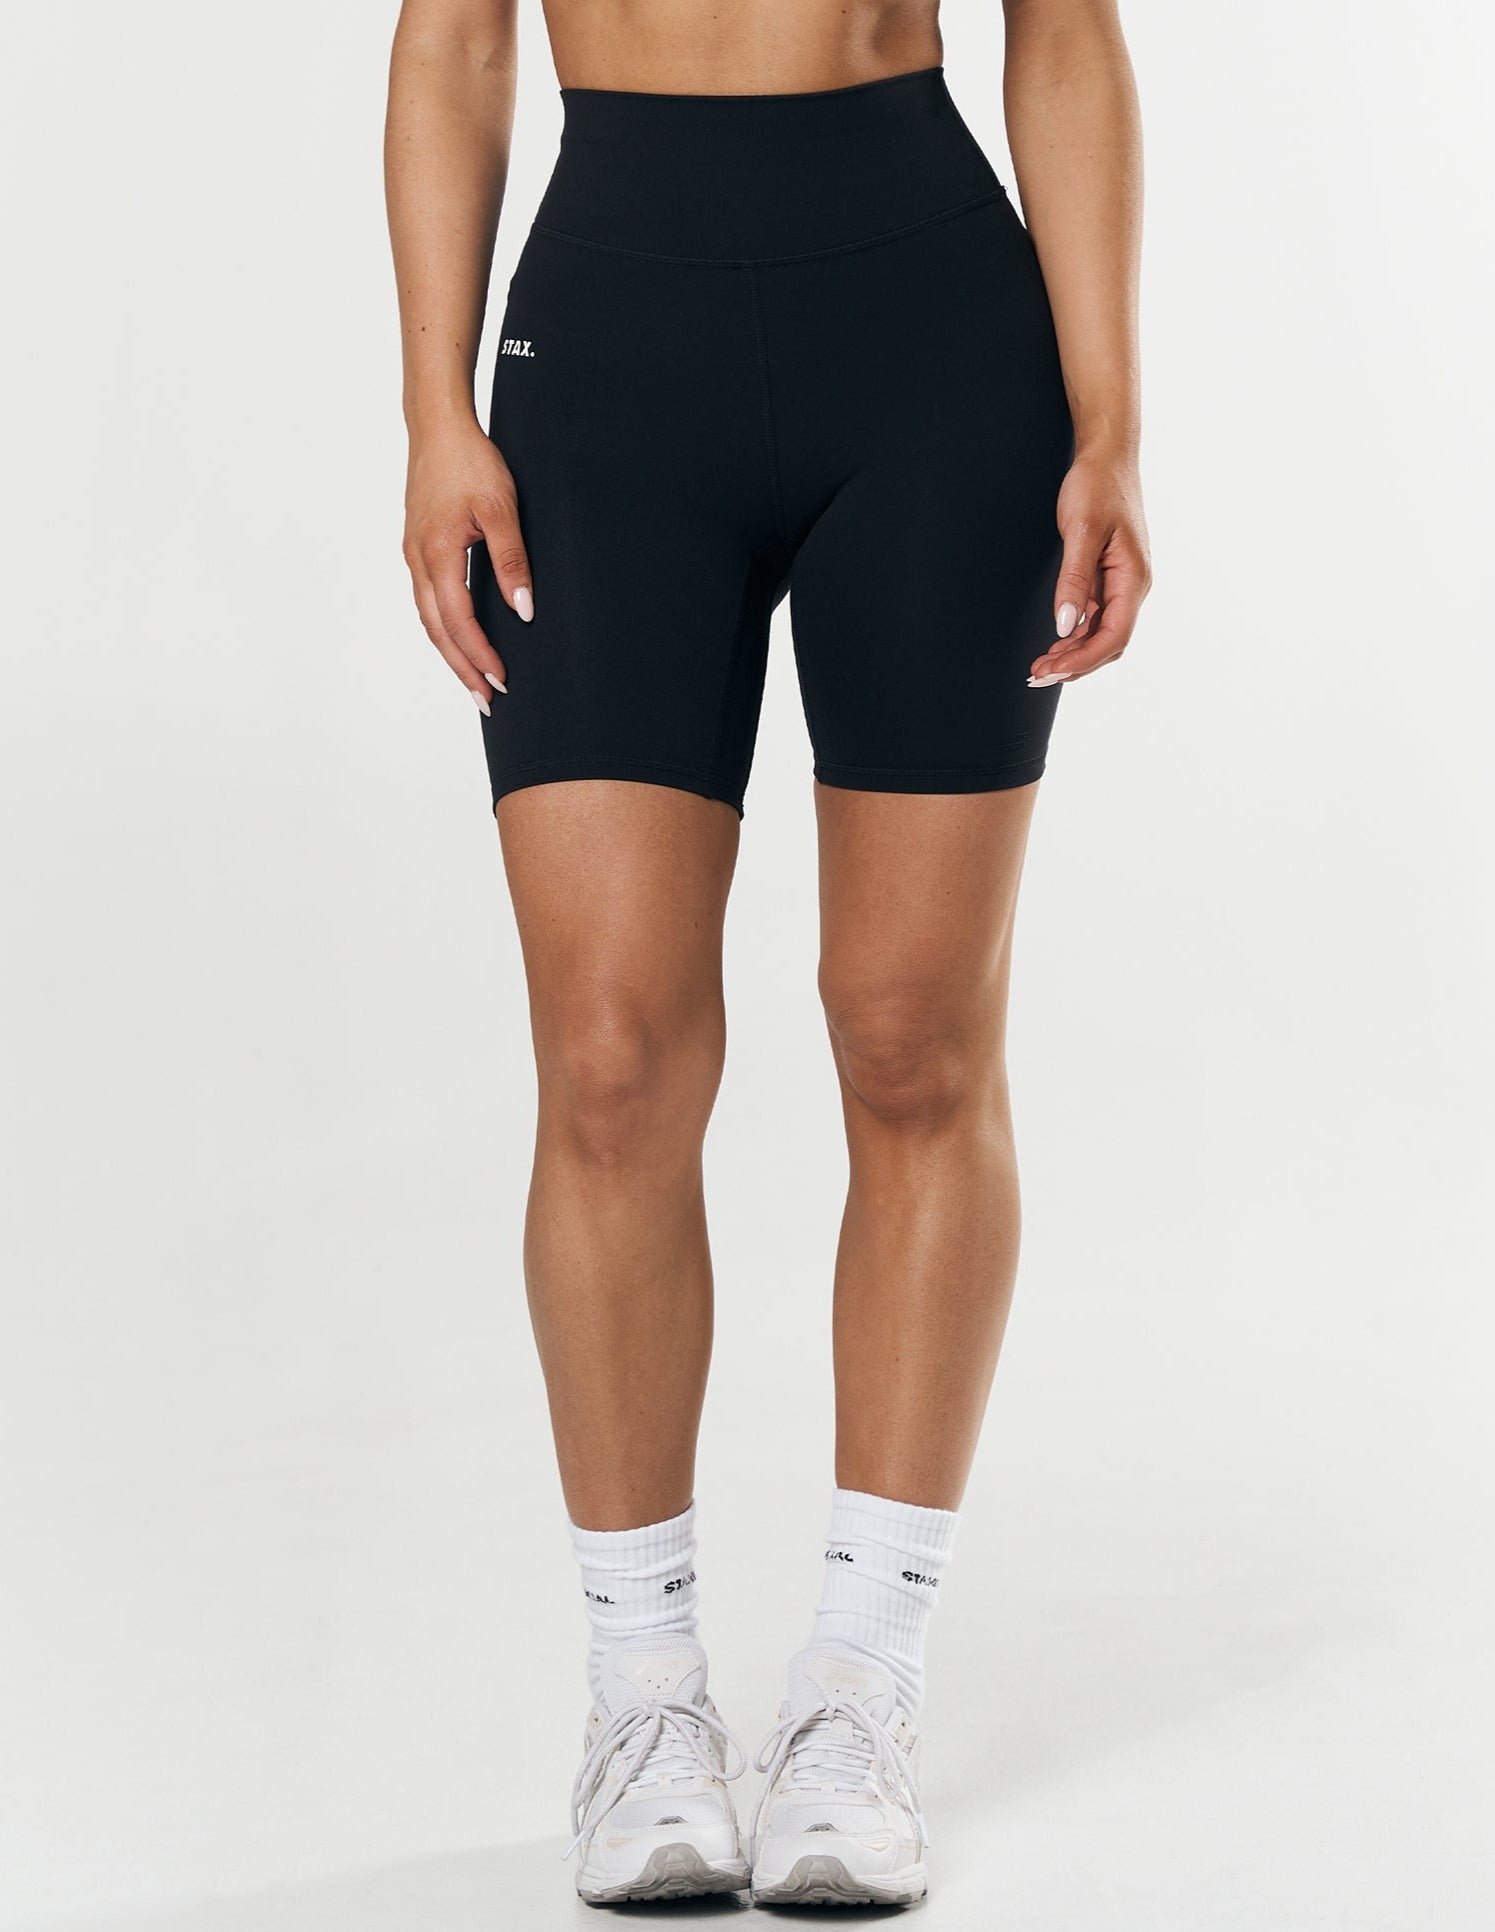 stax-original-bike-shorts-nandex-black